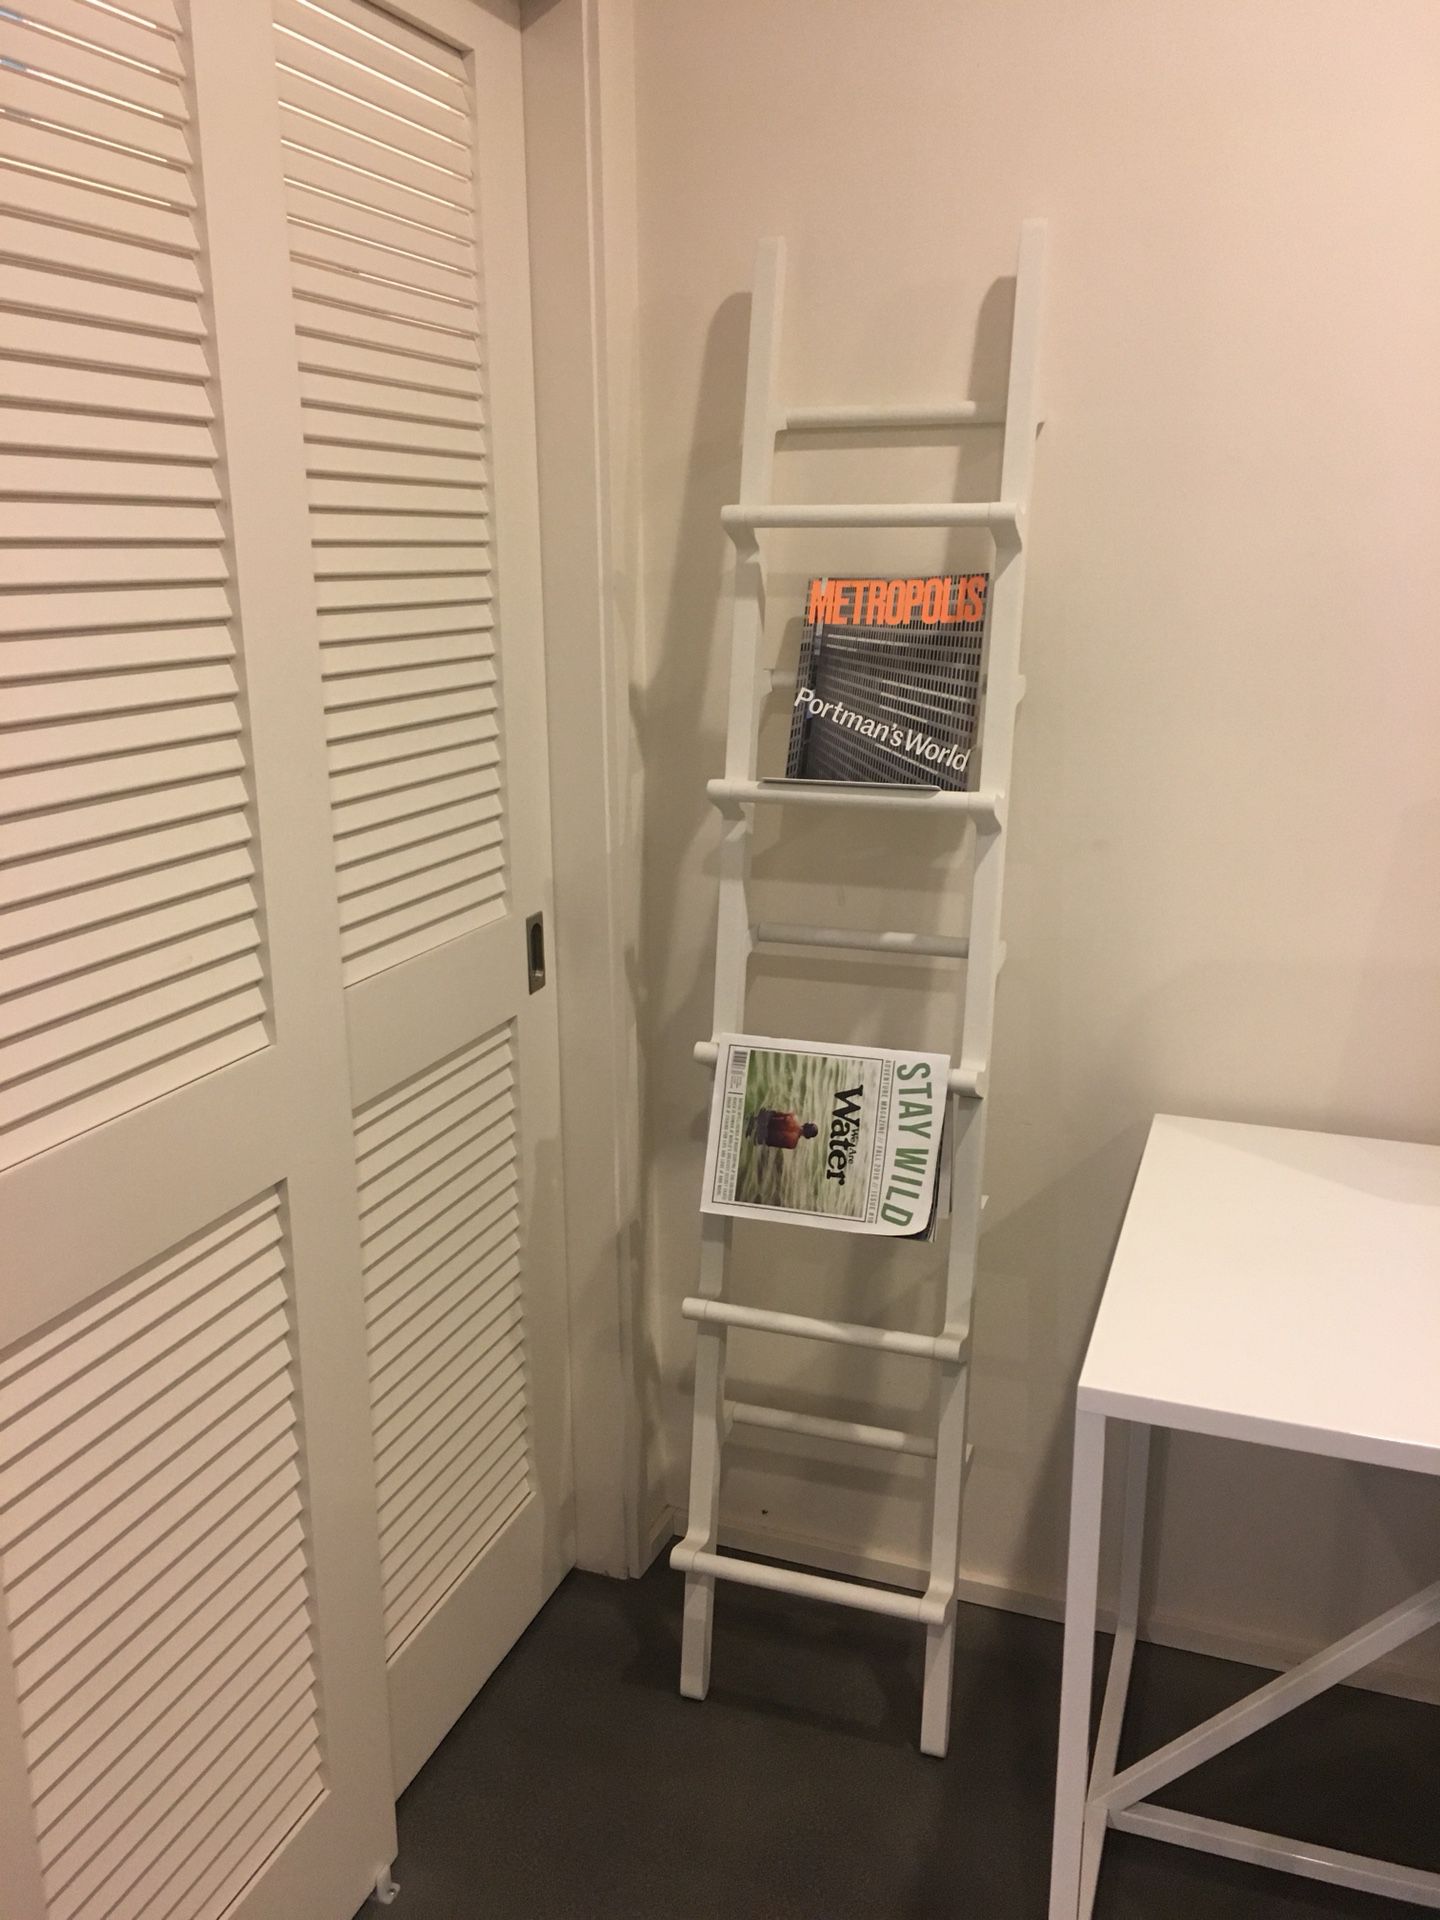 Hem magazine rack